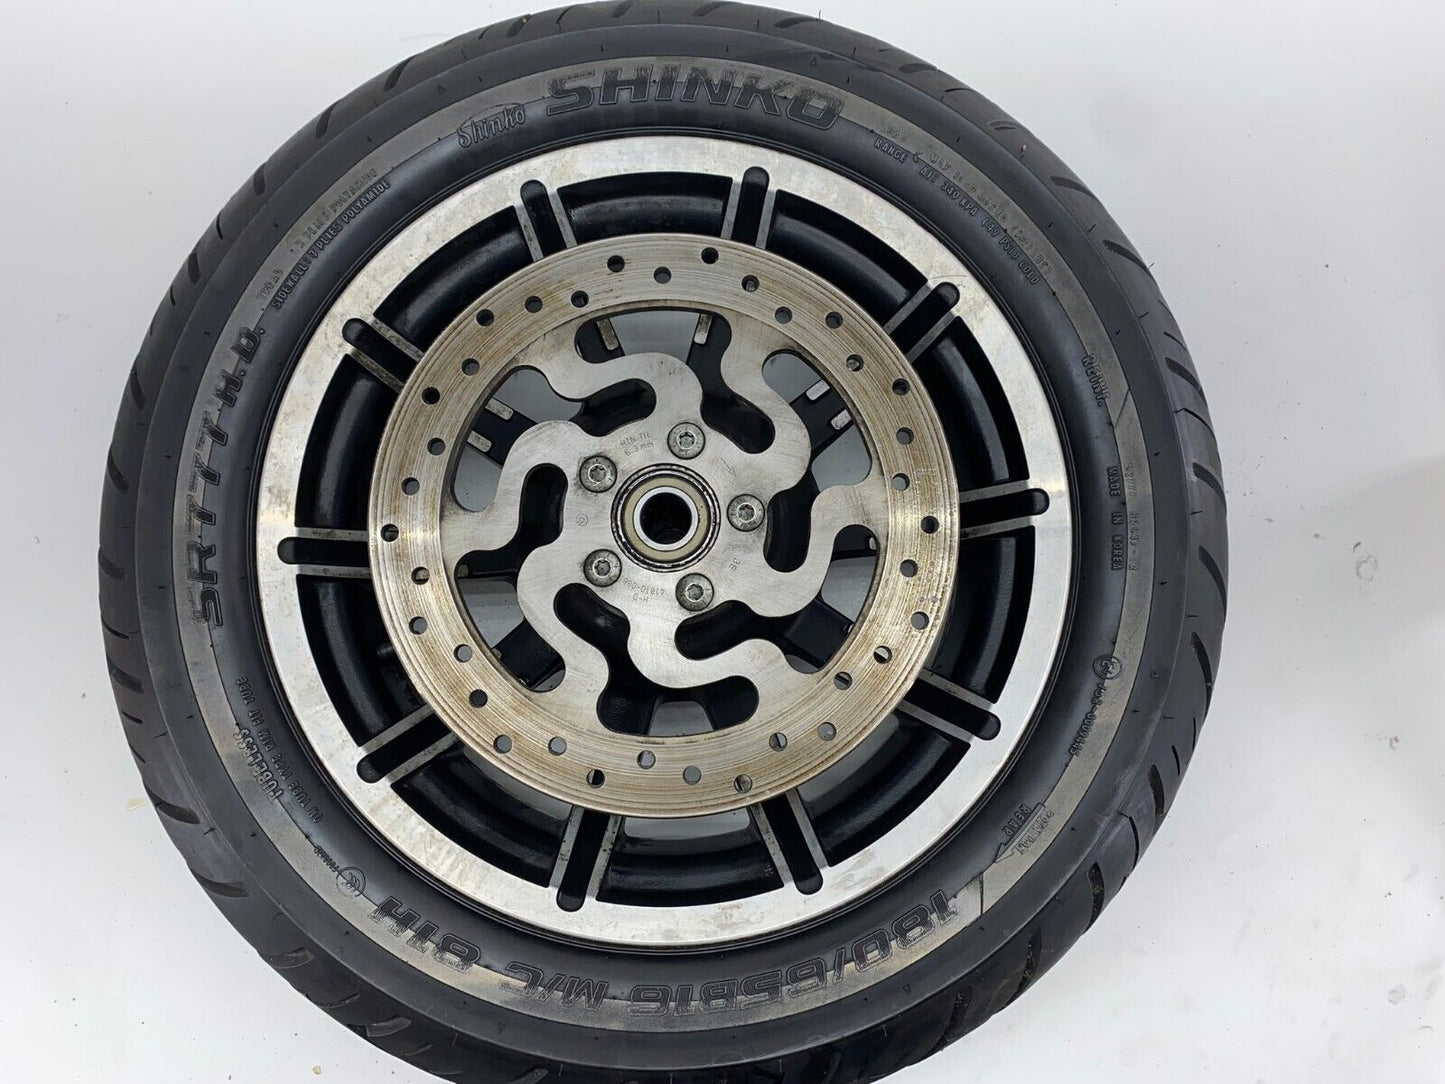 2014 Harley Davidson Electra Glide Rear Impeller Wheel Rim Tire 10 Spoke Mag